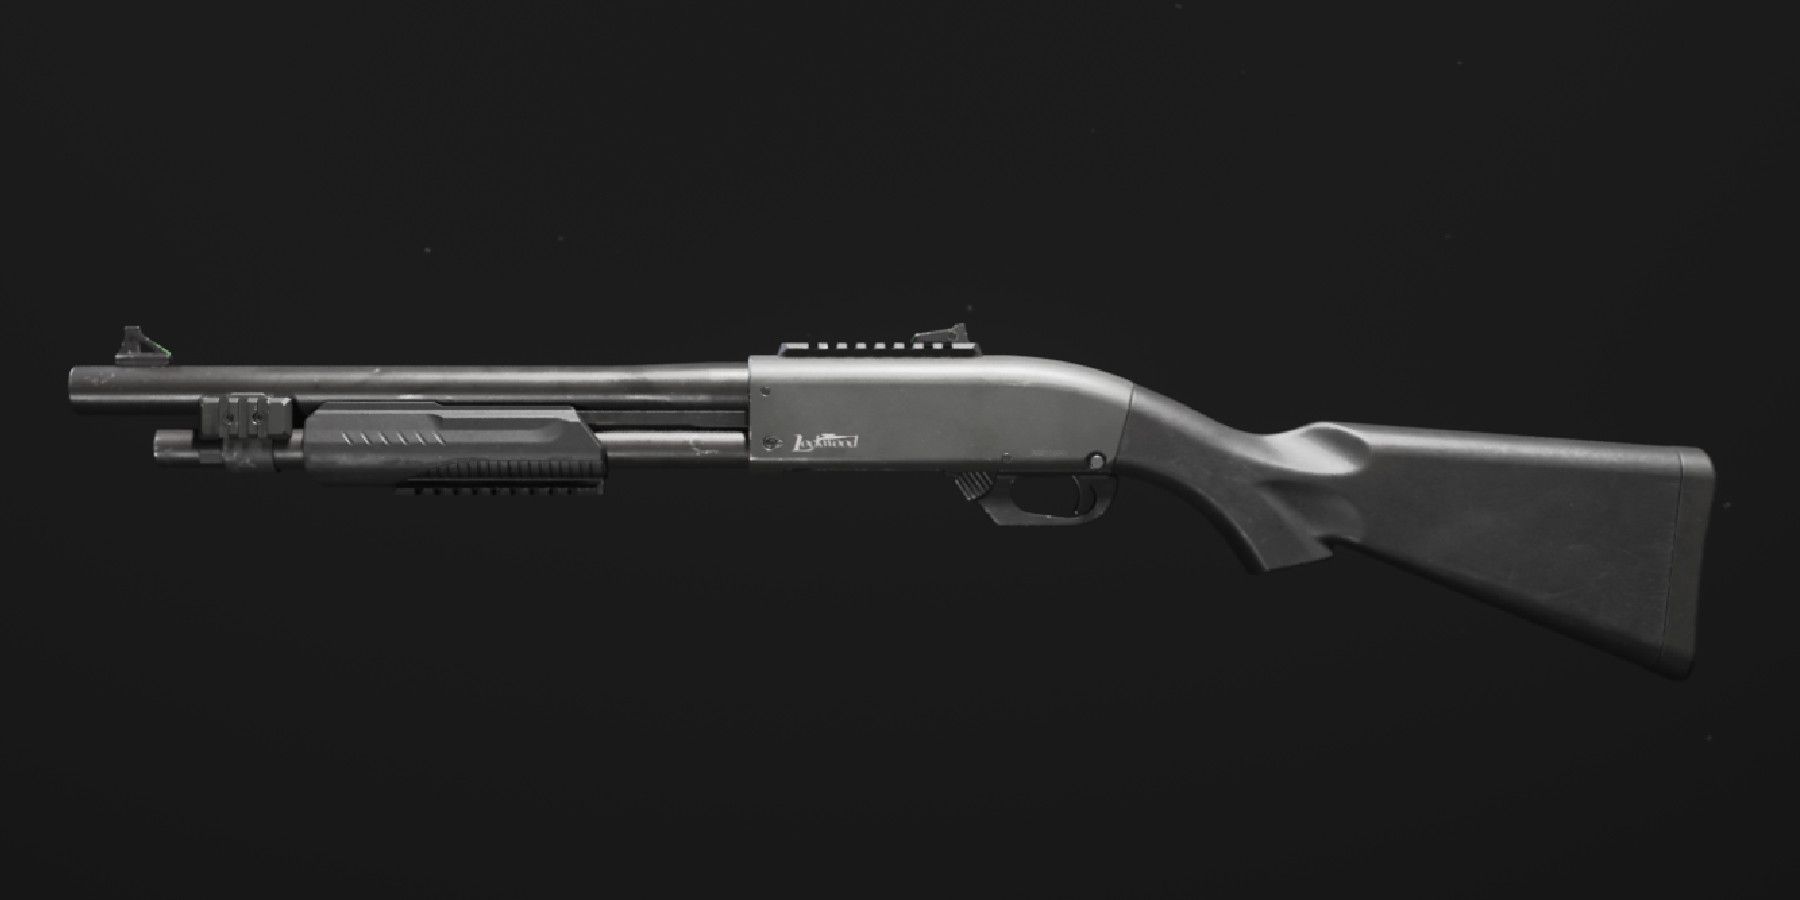 mw3 - weapon camos - lockwood 680